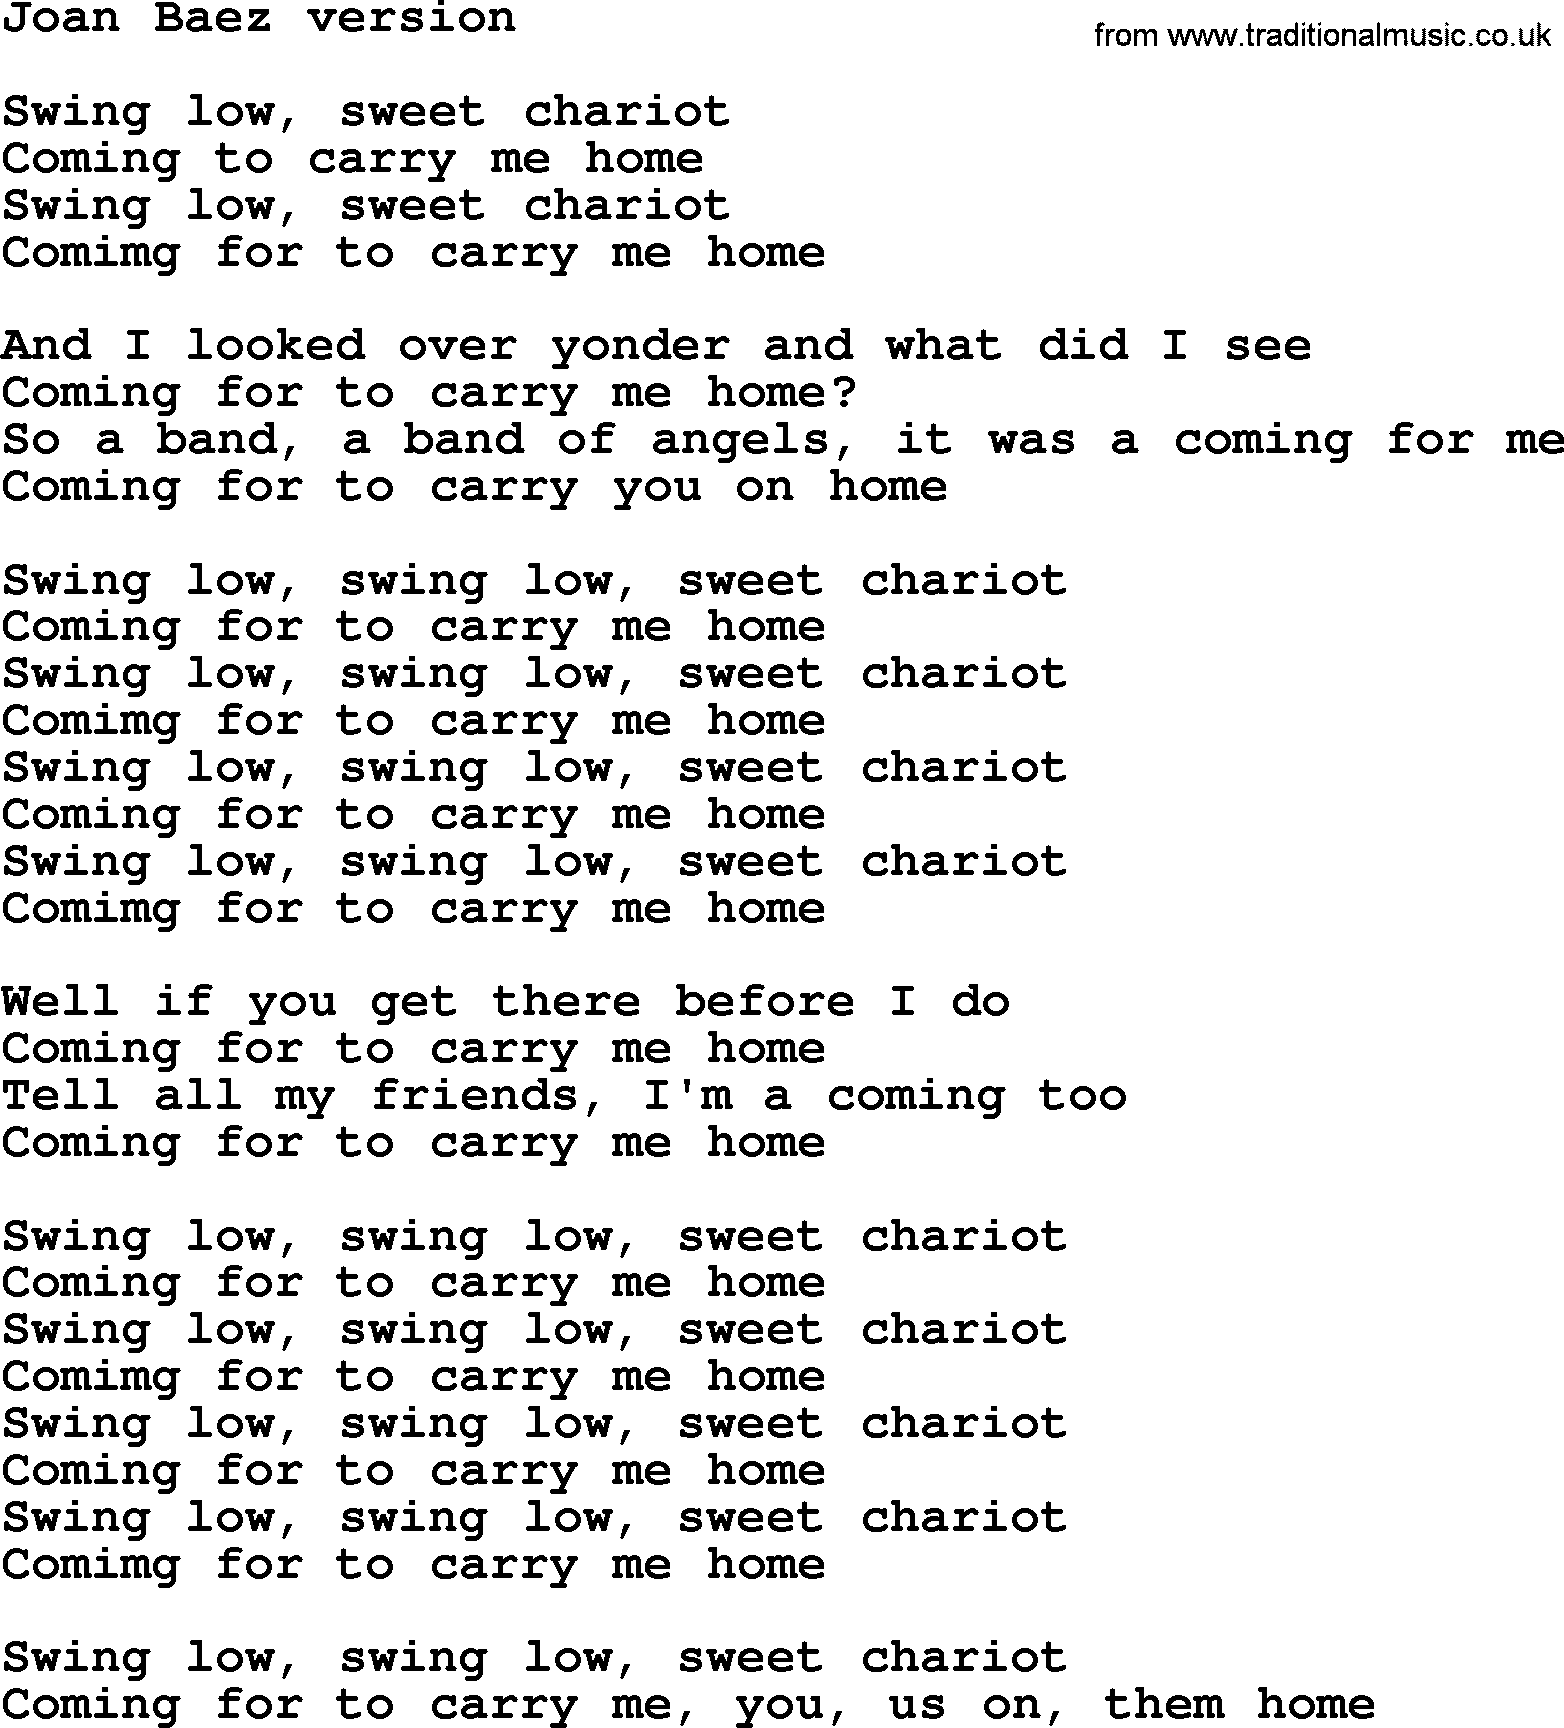 The Byrds song Joan Baez Version, lyrics